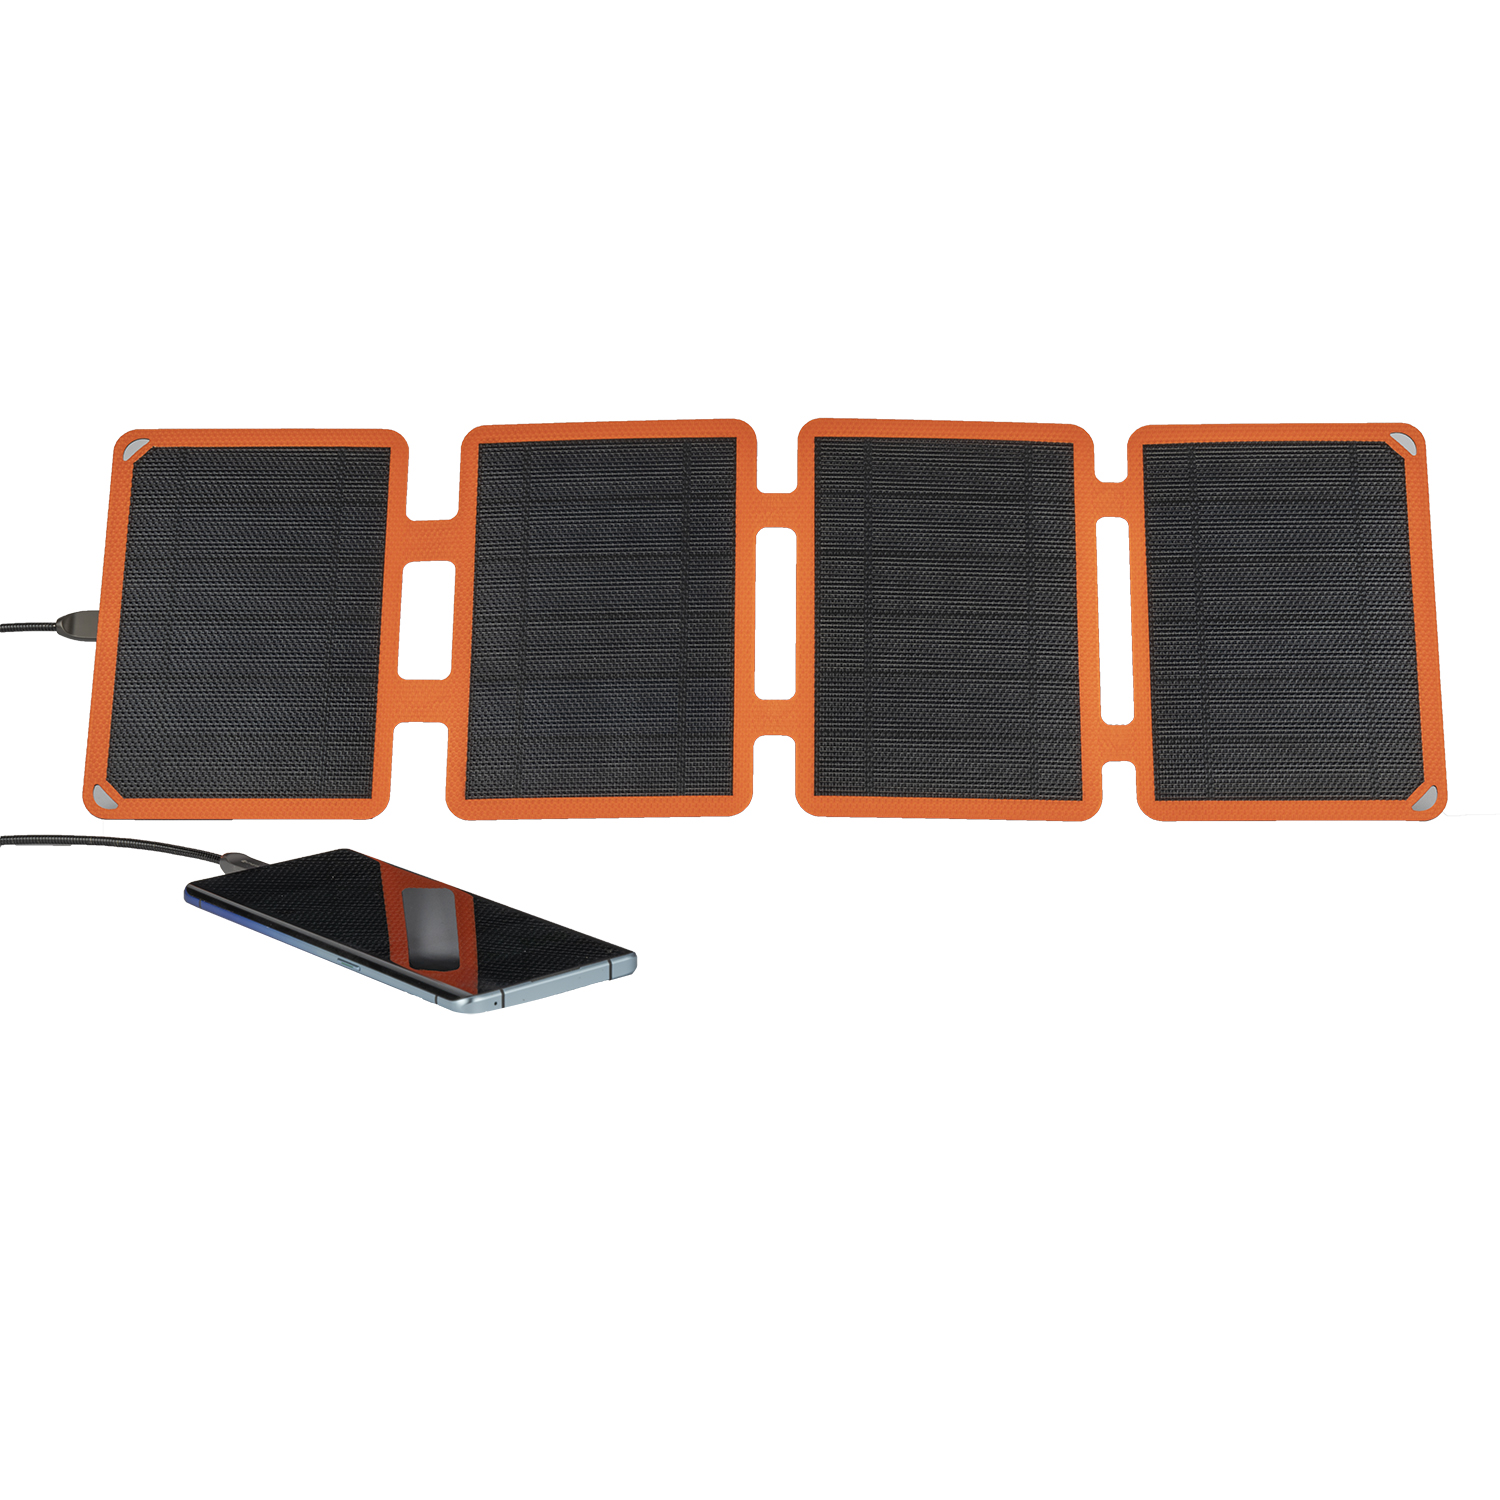 4SMARTS VoltSolar Compact Solar Panel